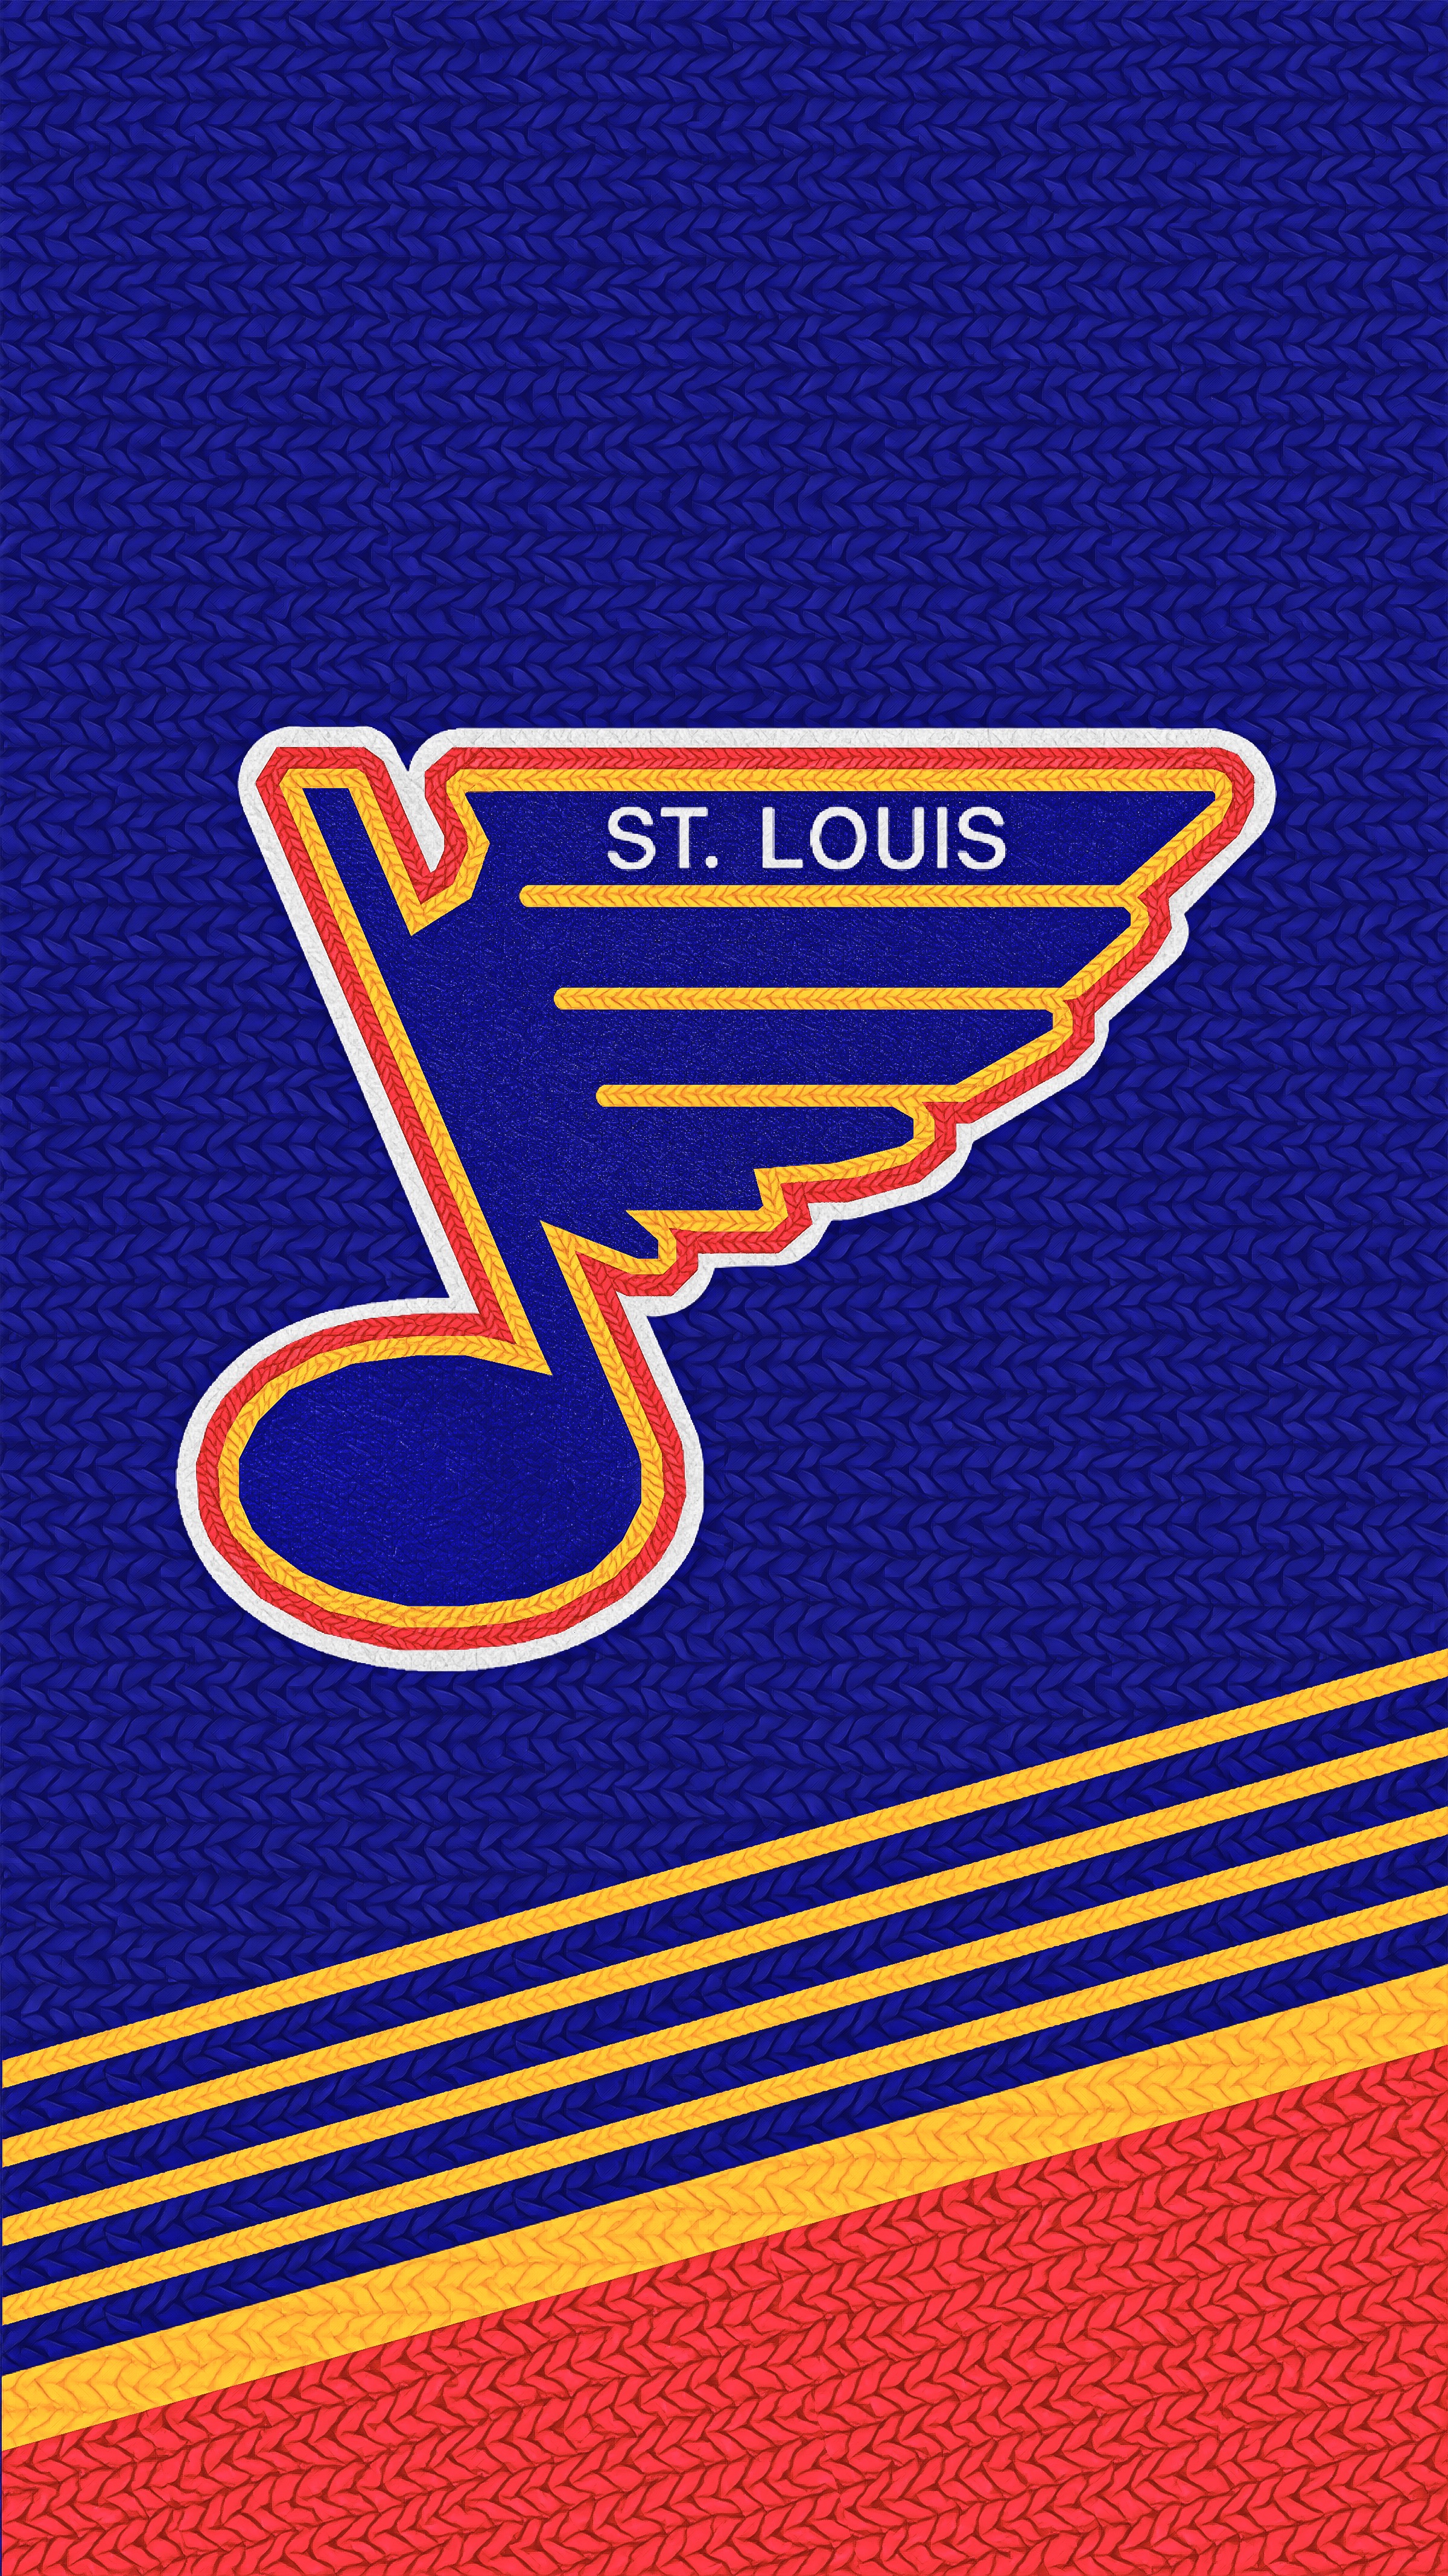 St. Louis Blues - Reverse Retro Authentic NHL Jersey/Customized :: FansMania